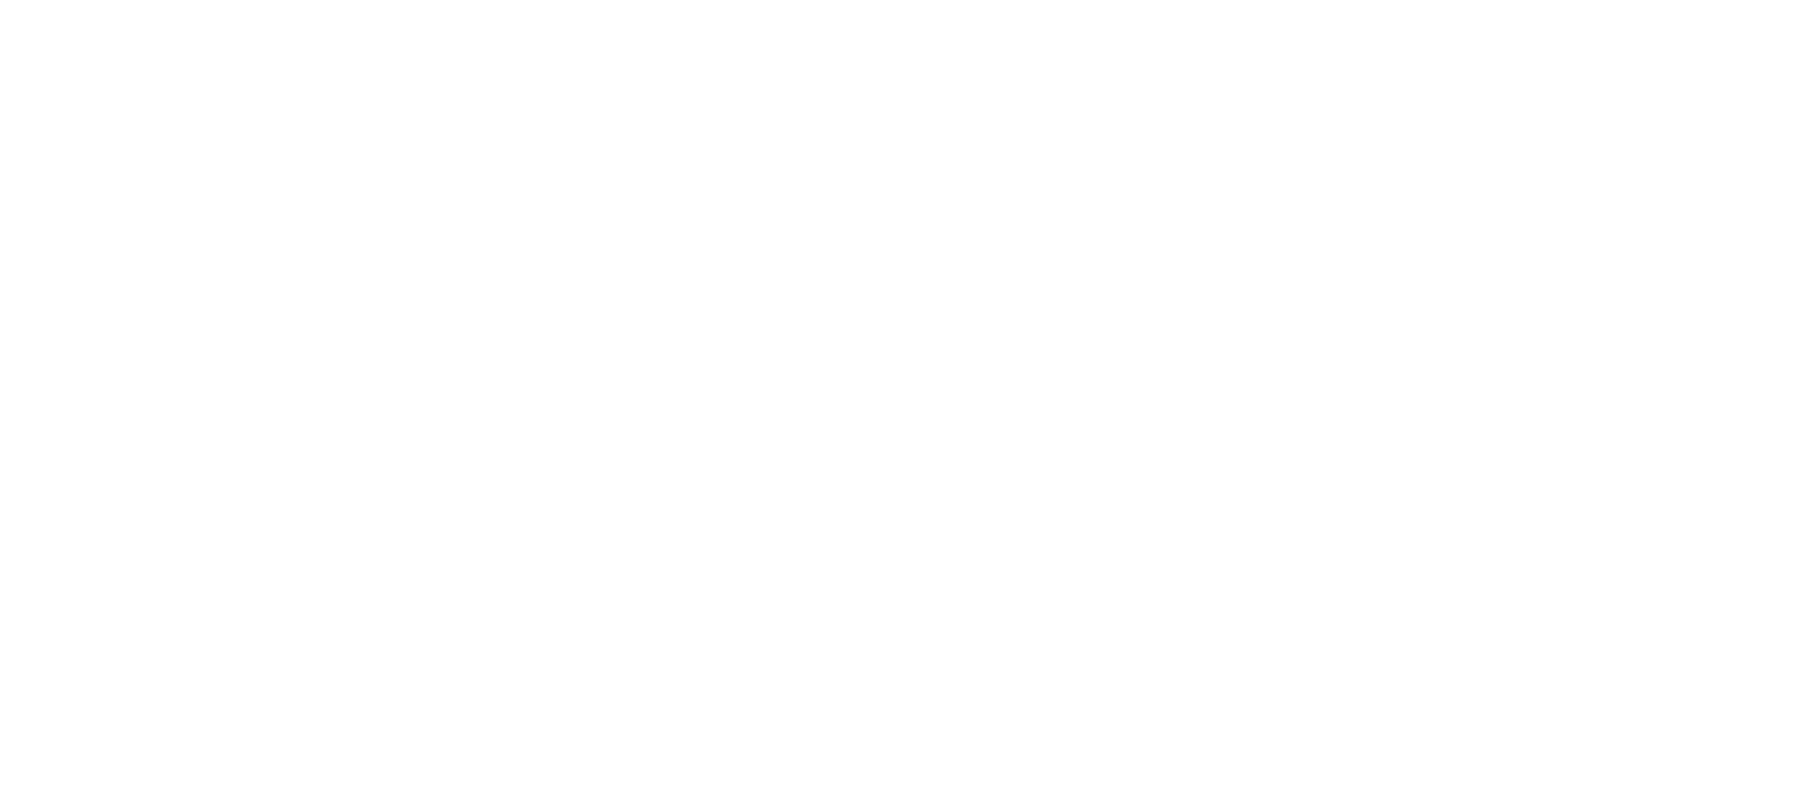 Kelly: The three pillars of workforce resilience